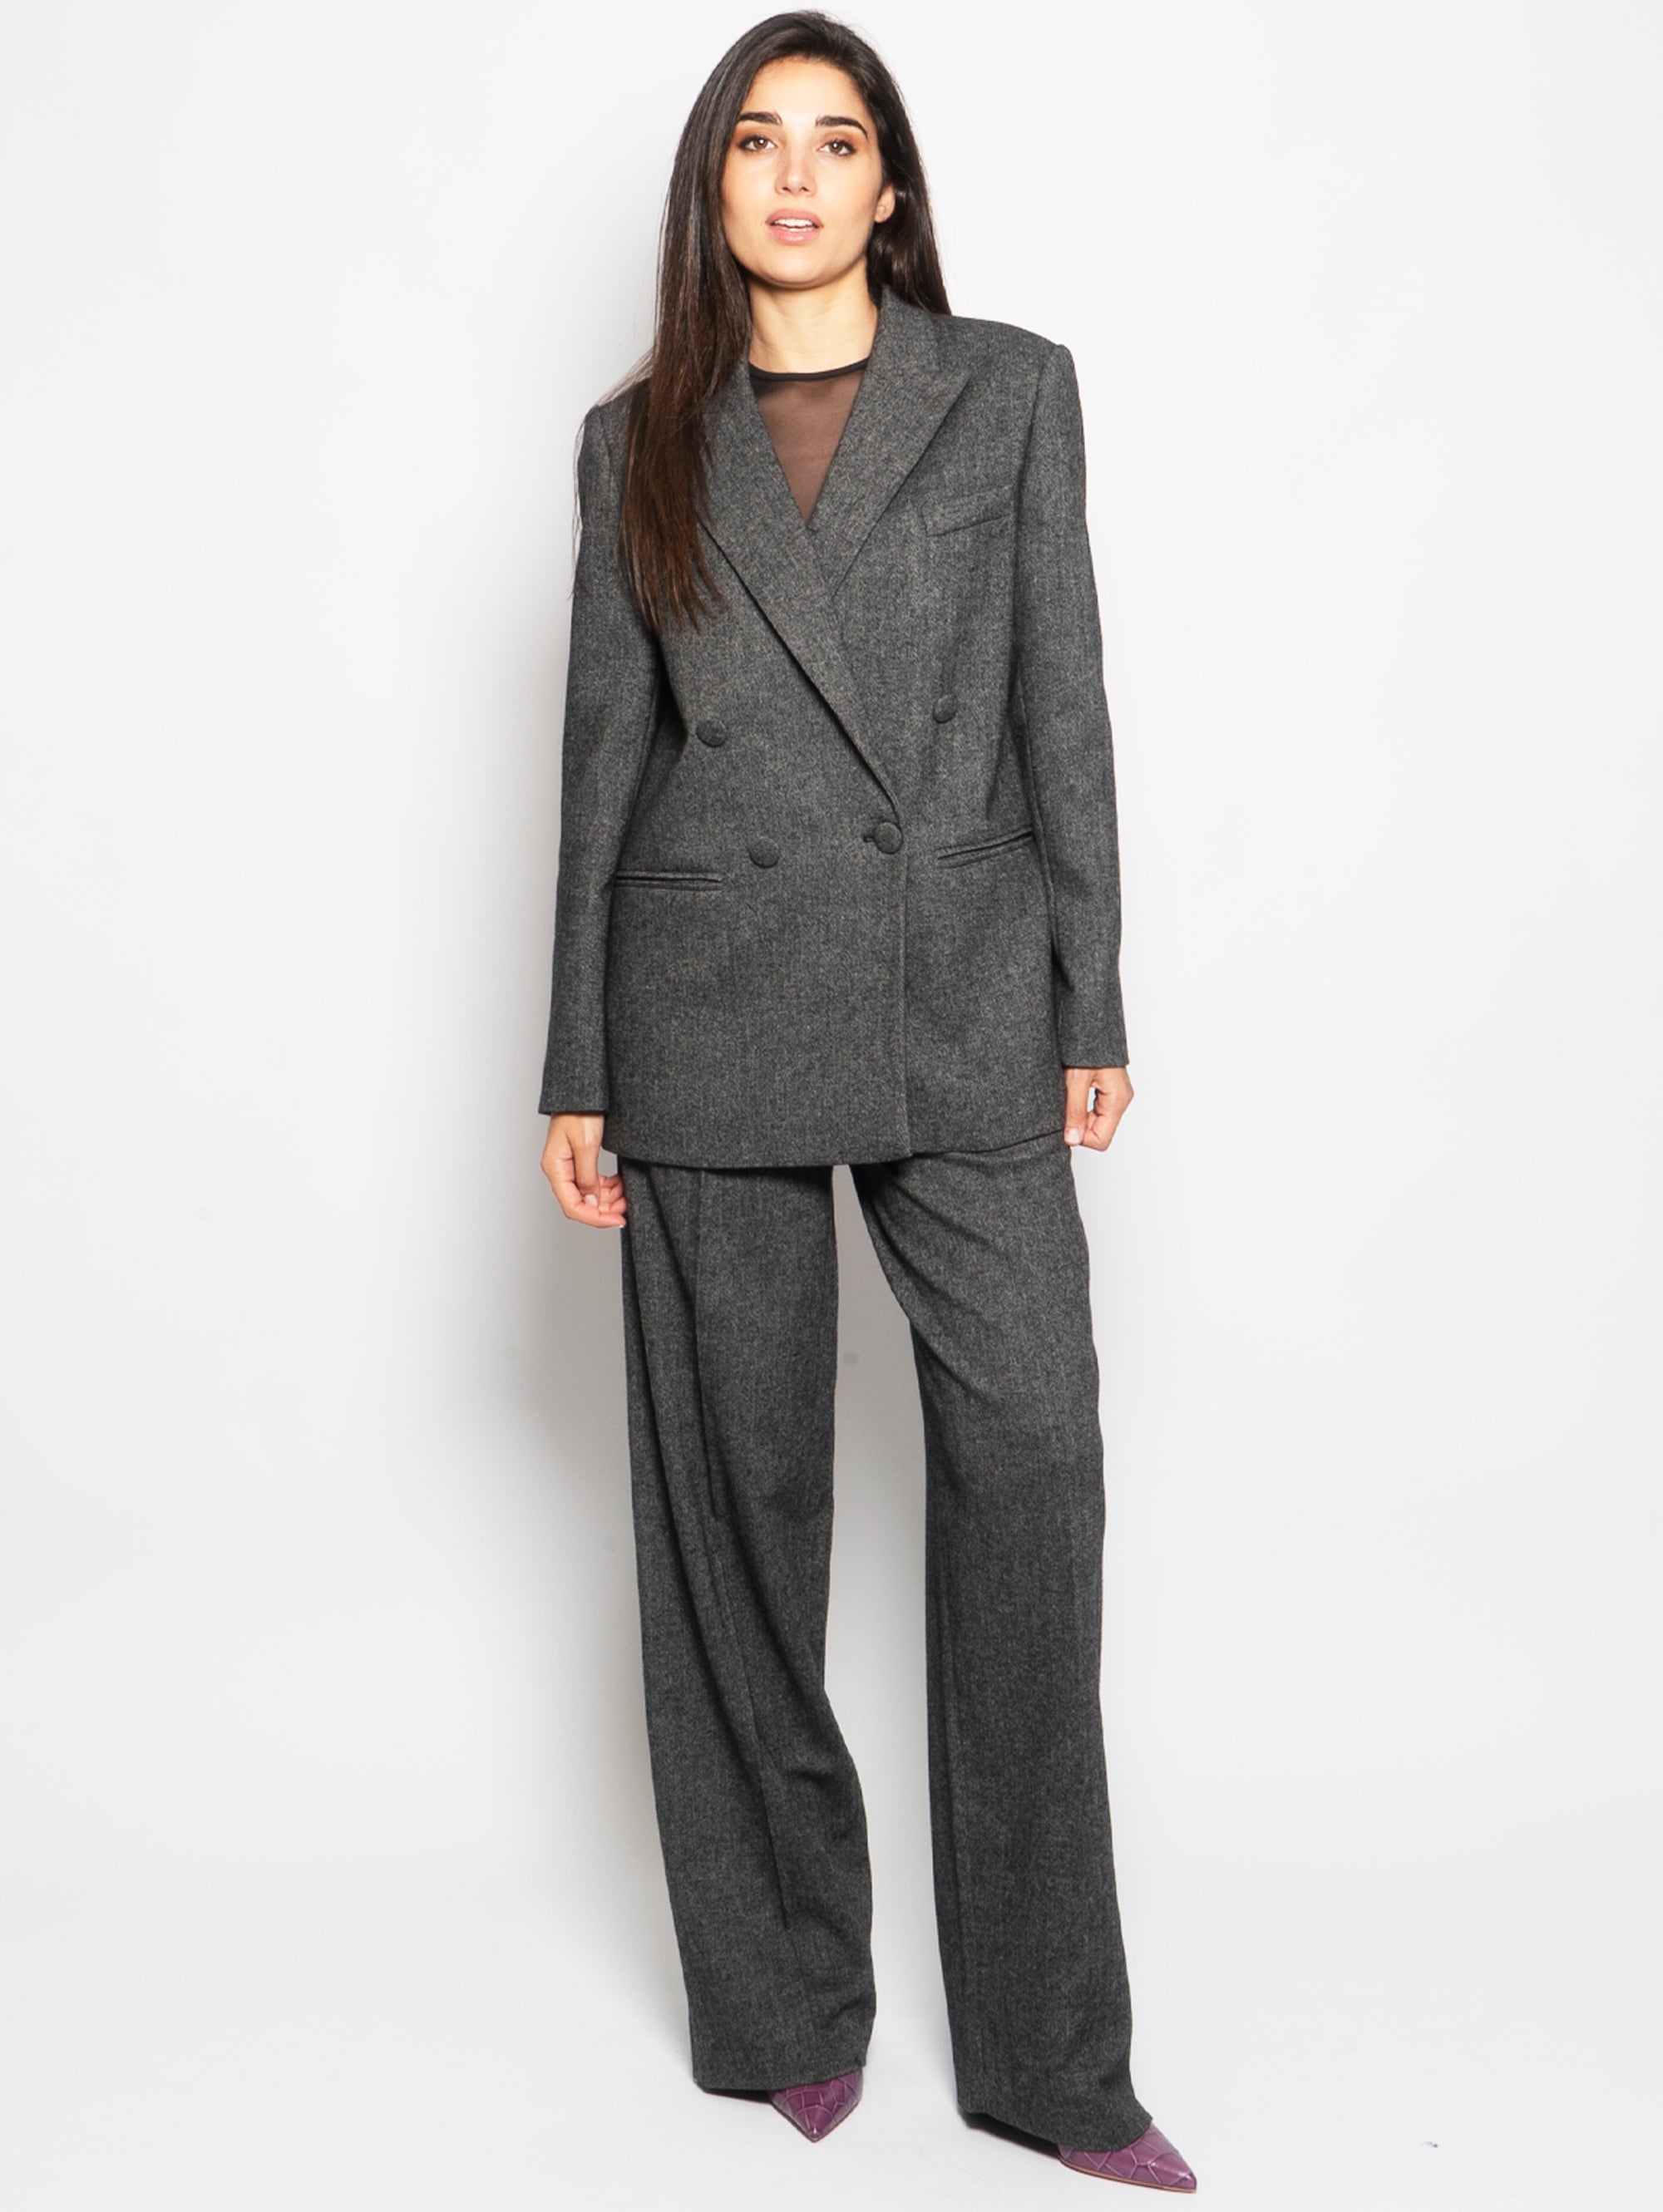 Zweireihige Jacke aus grauem Tweed